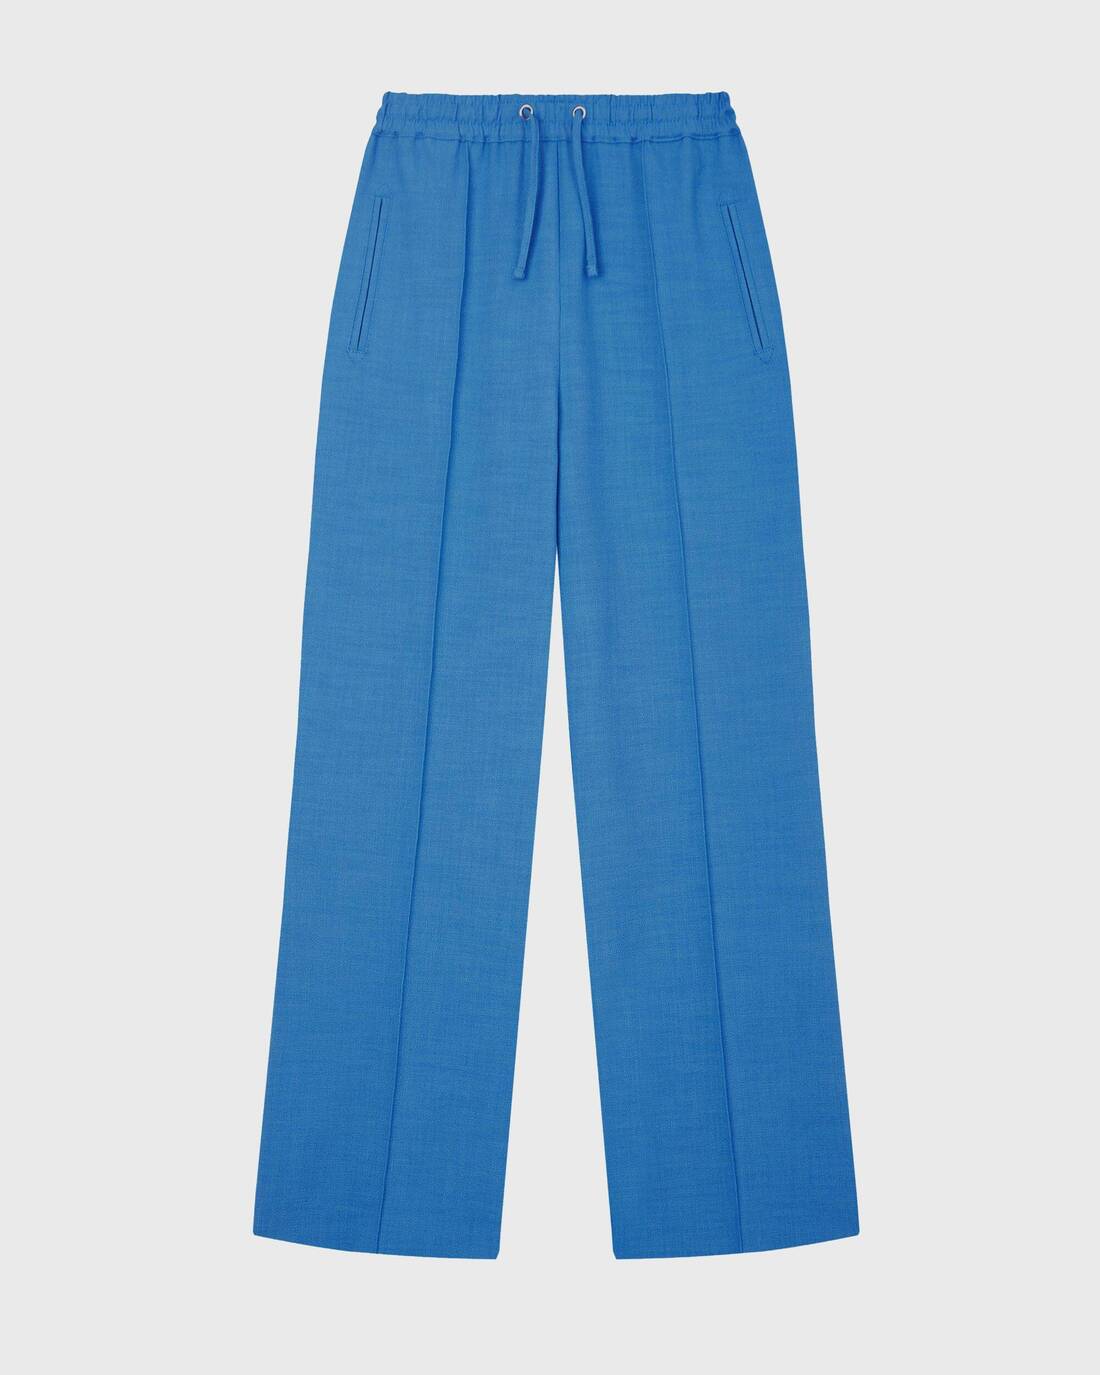 Pyjama style pants with elastic waist